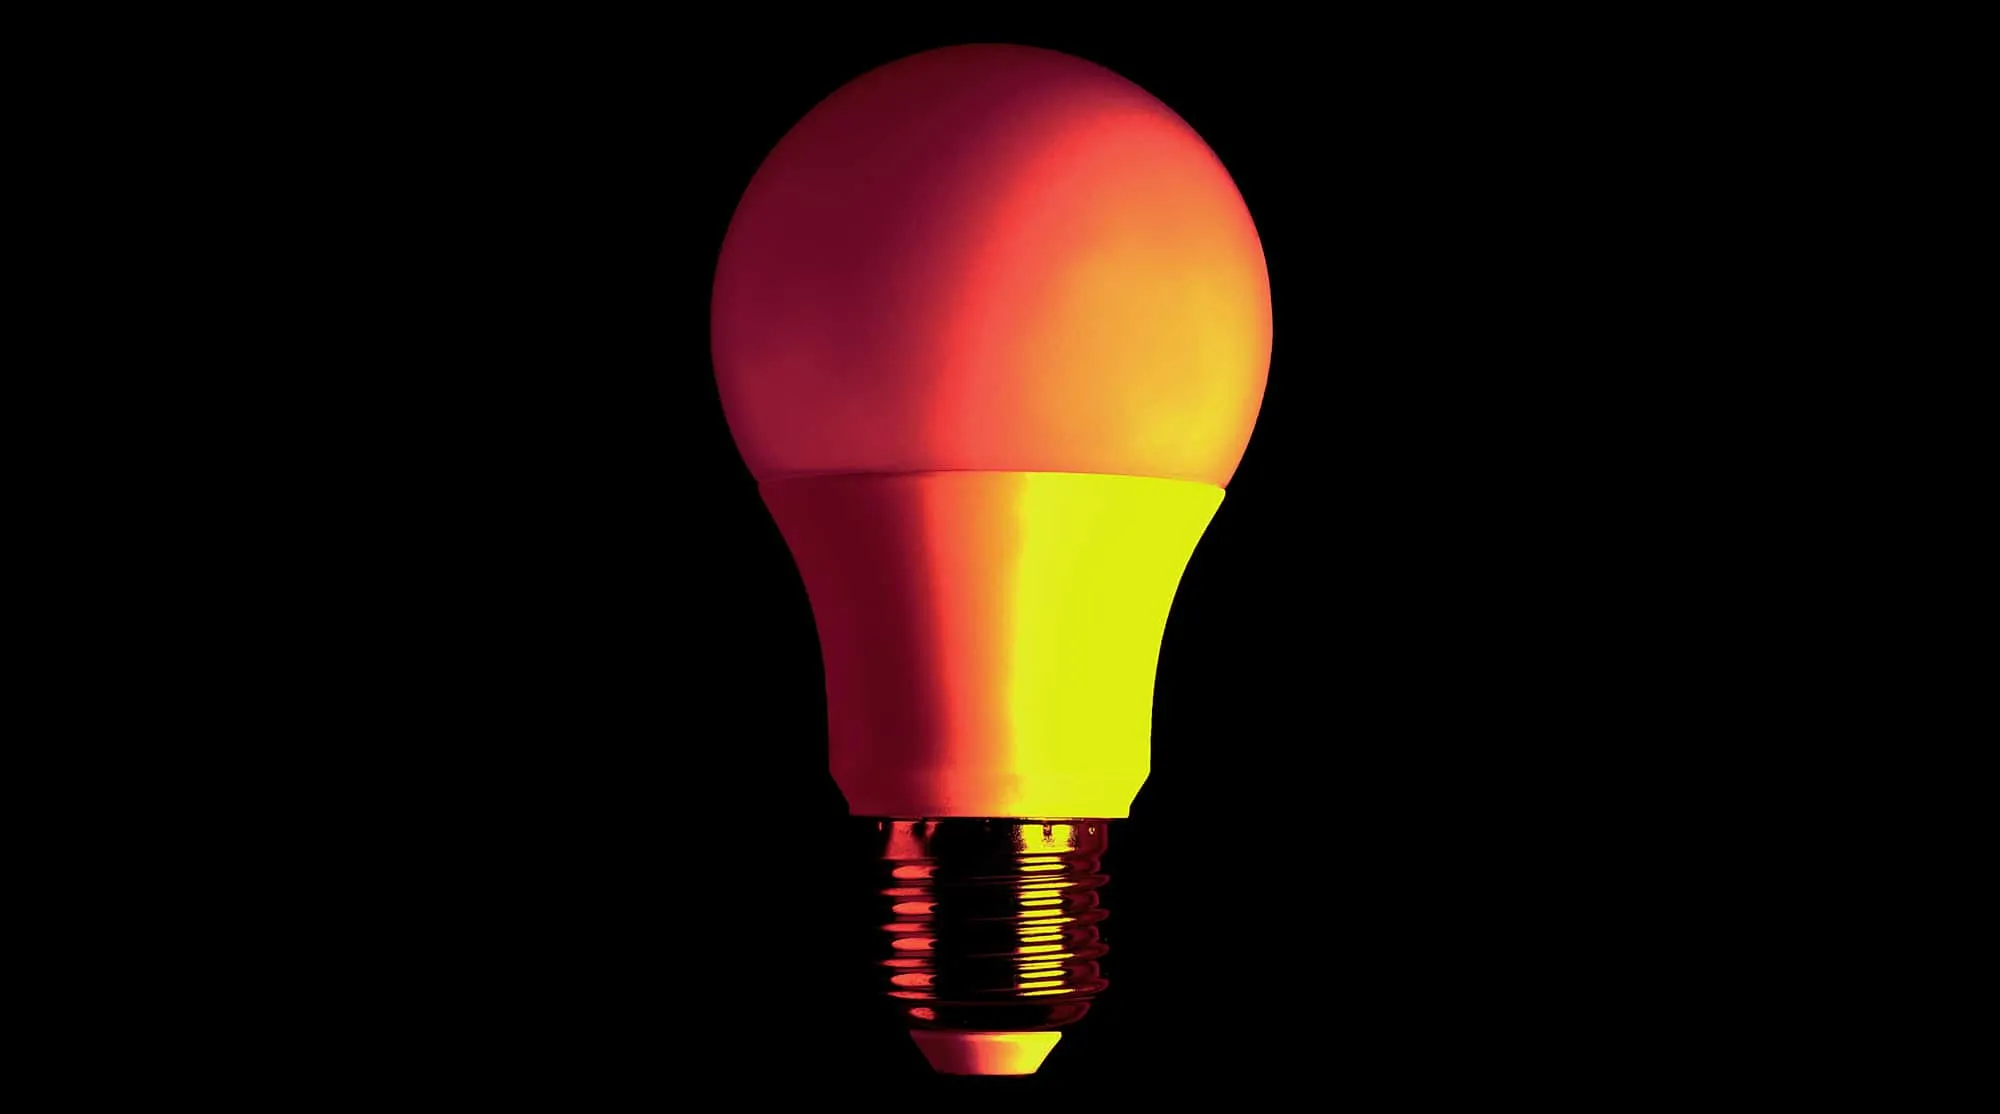 An image of an energy efficient LED lightbulb